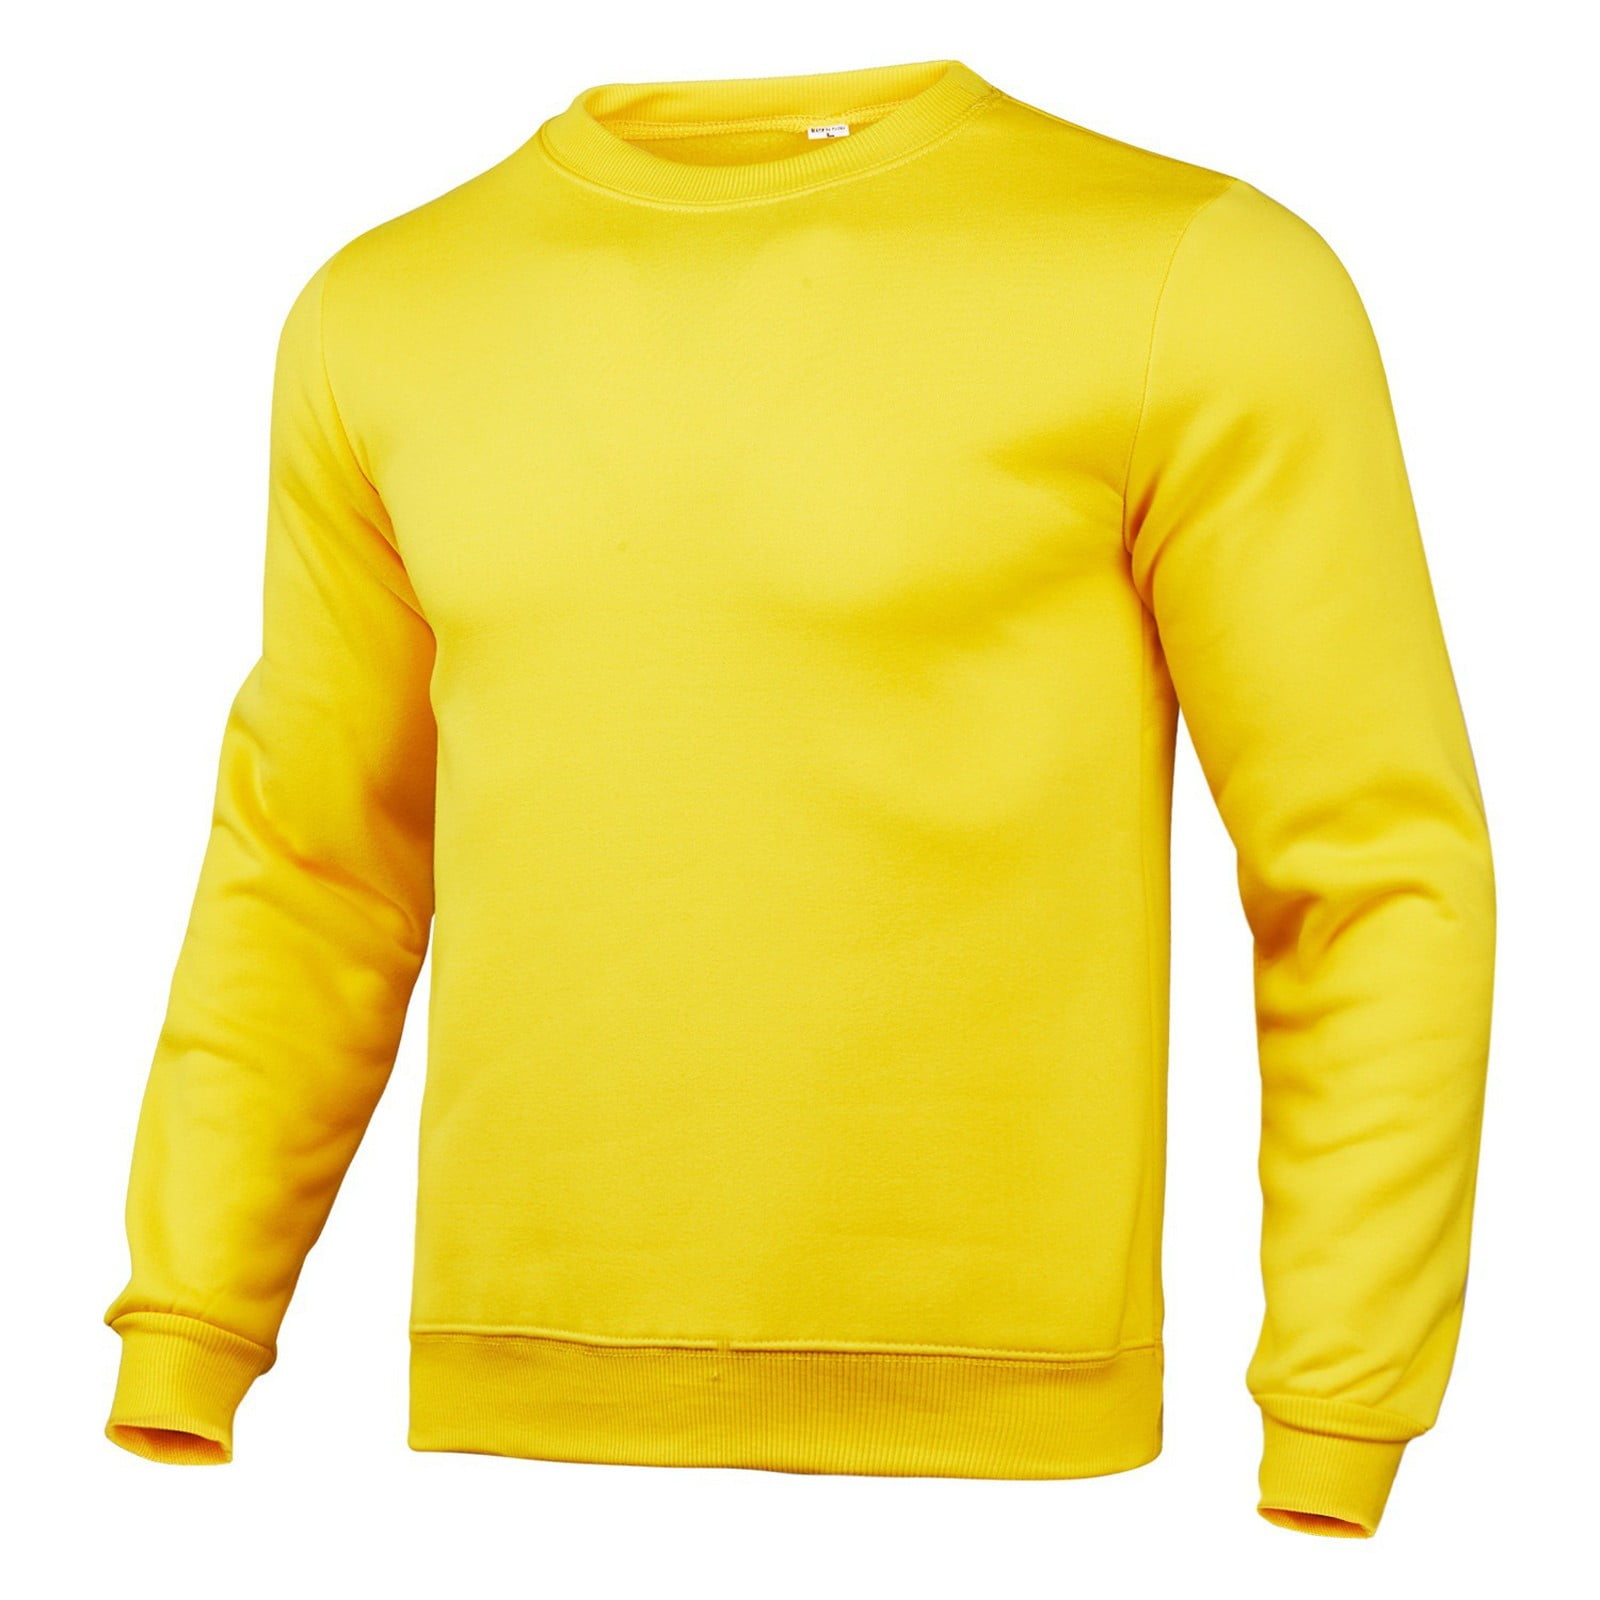 Yellow Golf Shirts For Men Men's Casual Sweatshirt O Neck Tops Solid ...